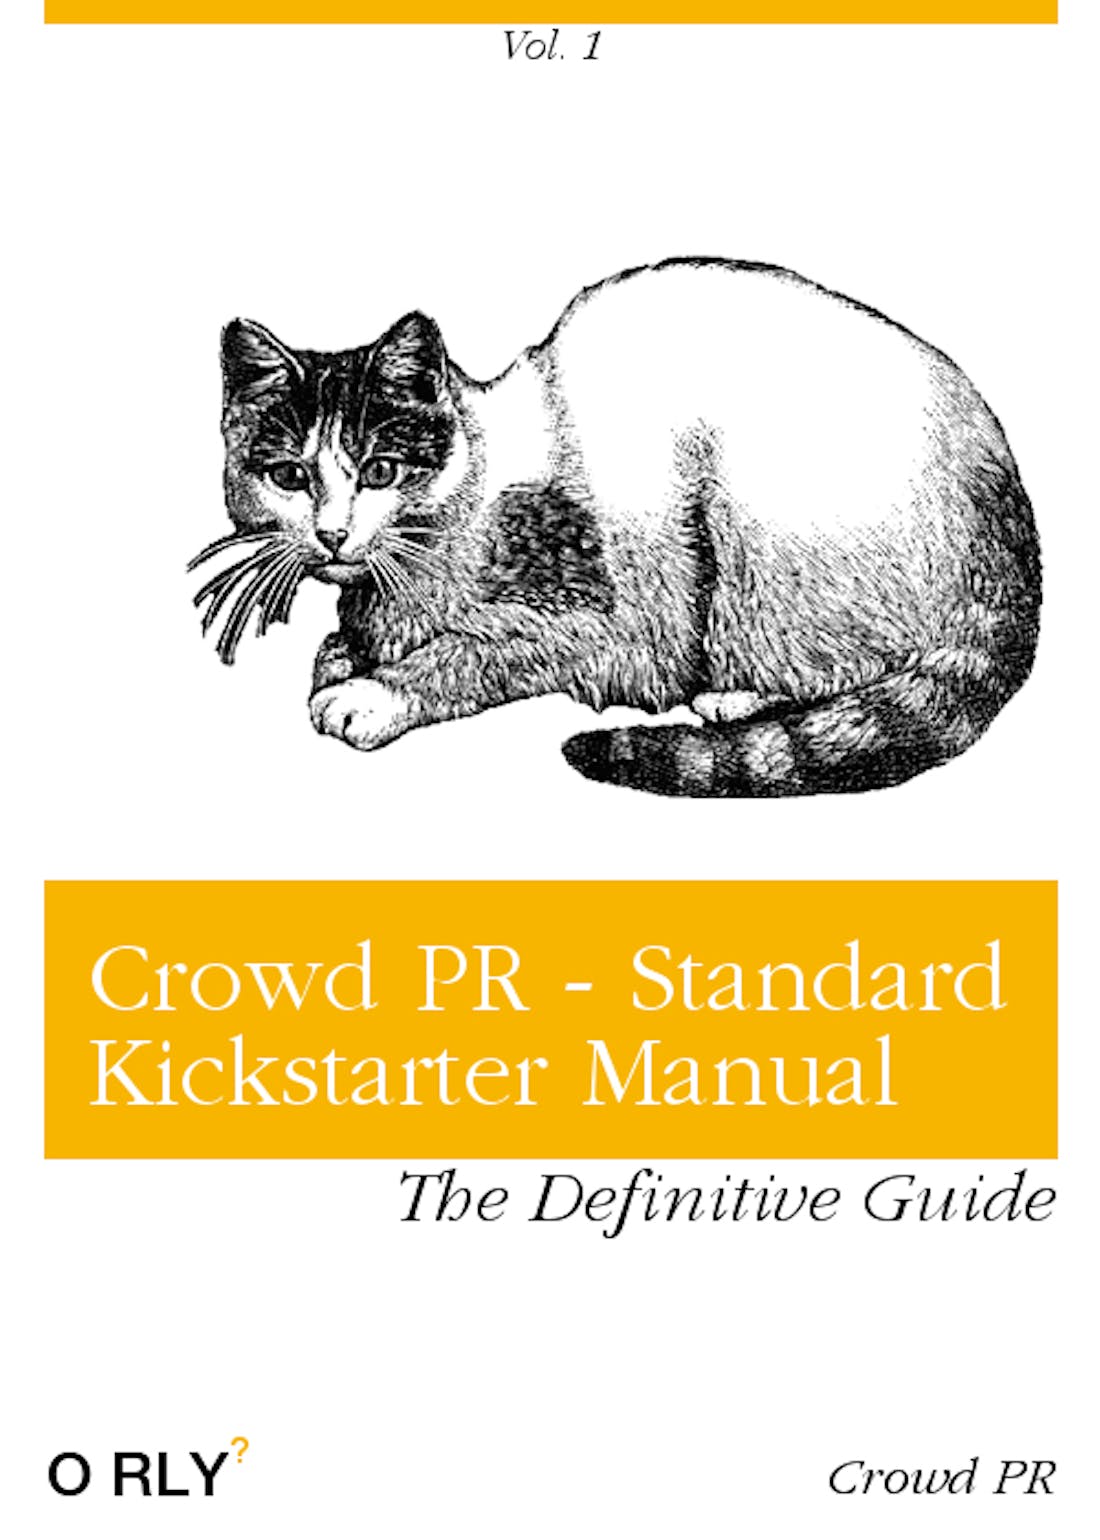 Crowd PR - Standard Kickstarter Manual media 1